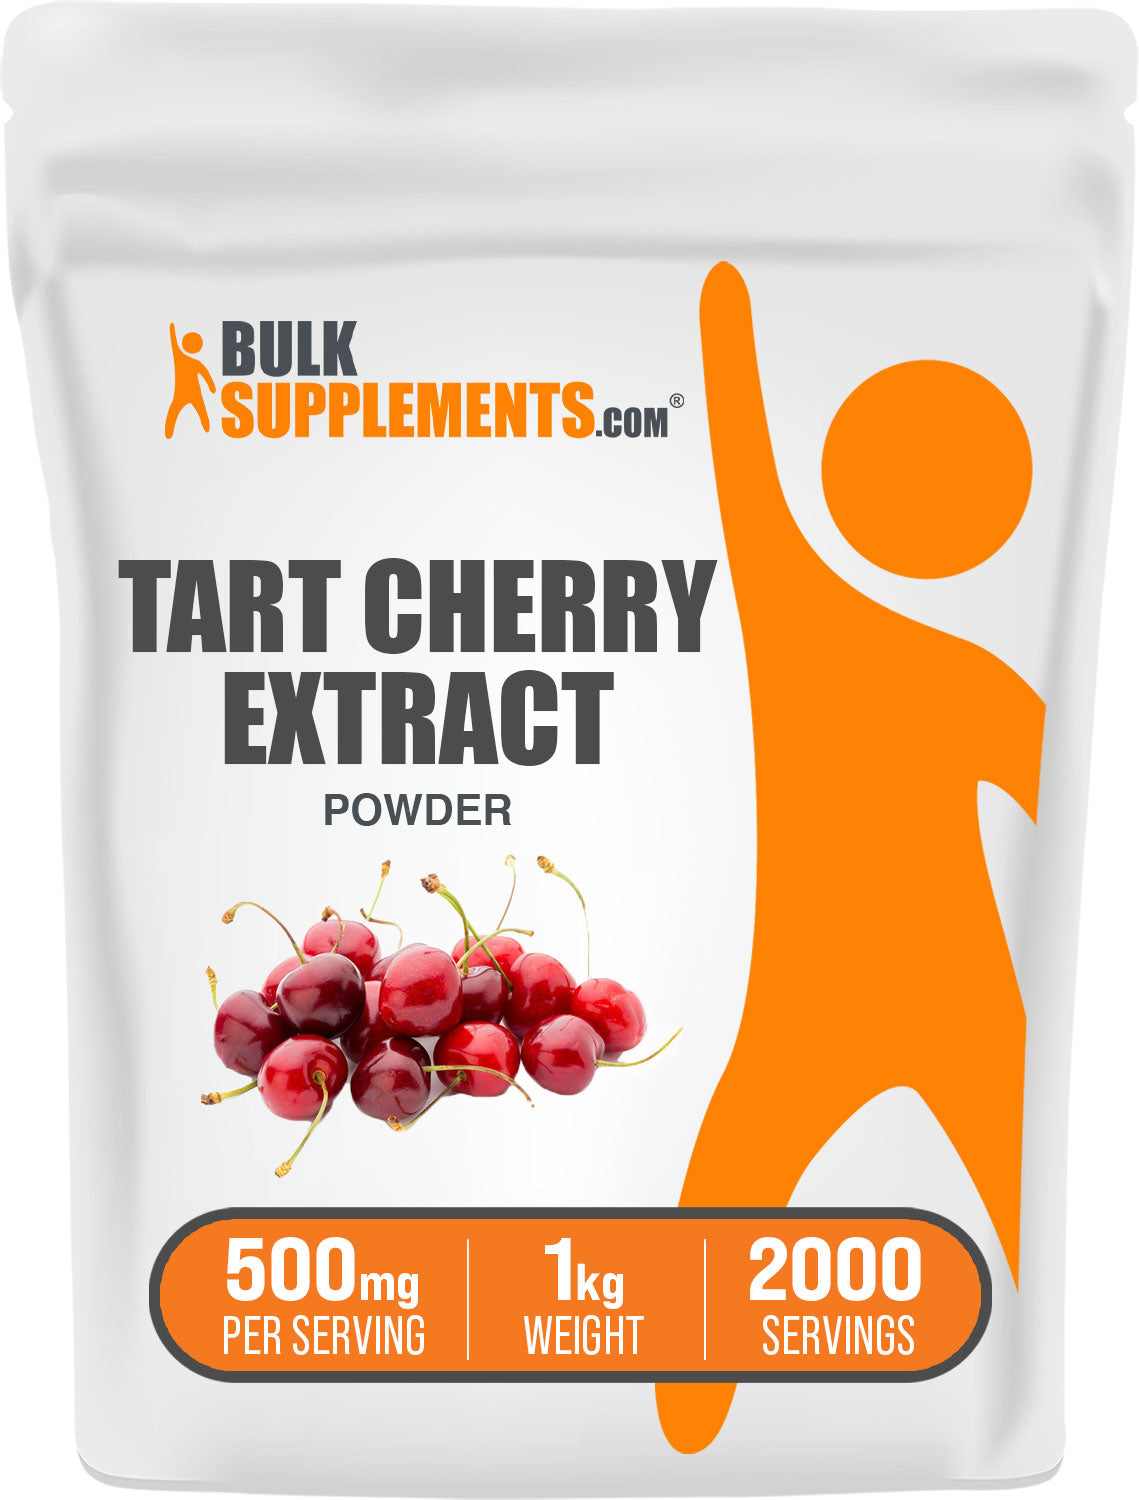 Tart Cherry Extract Powder 1kg Bag